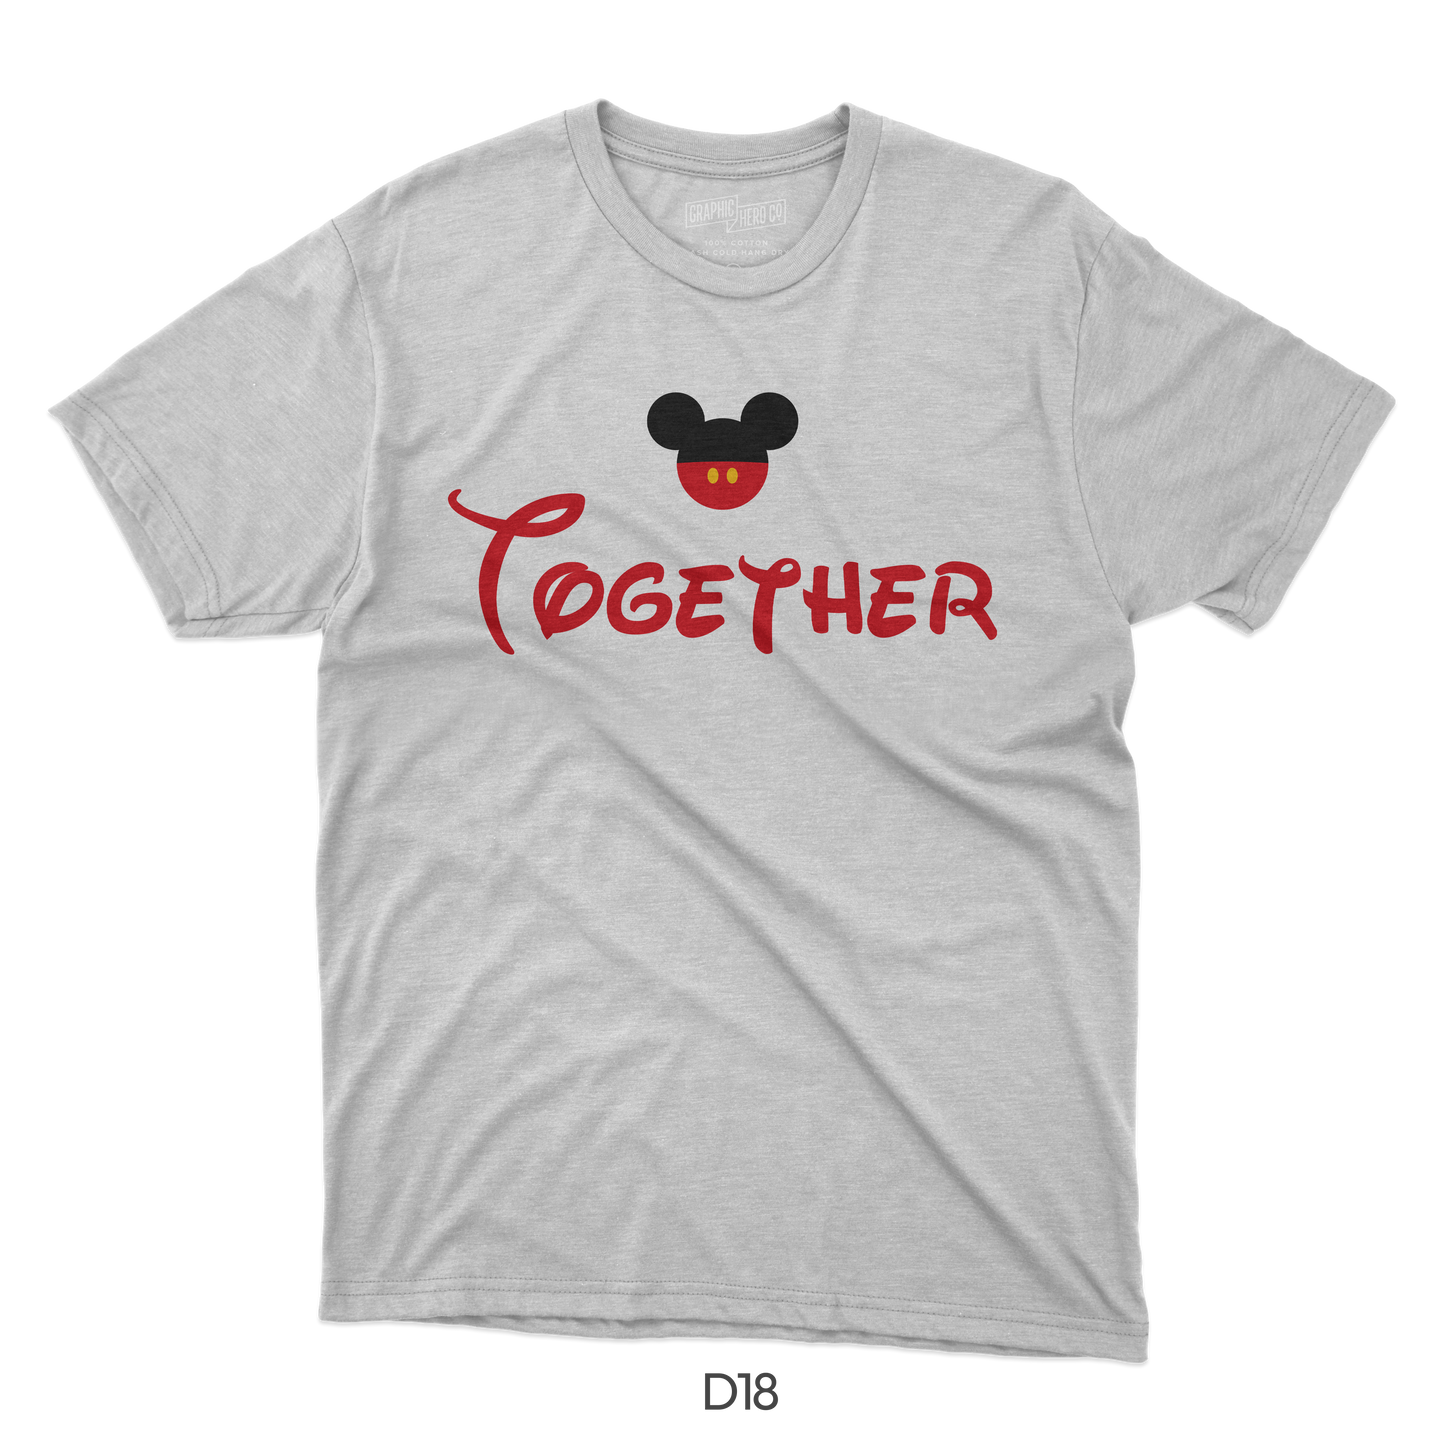 Together Mickey's Version Disney Design (D18)